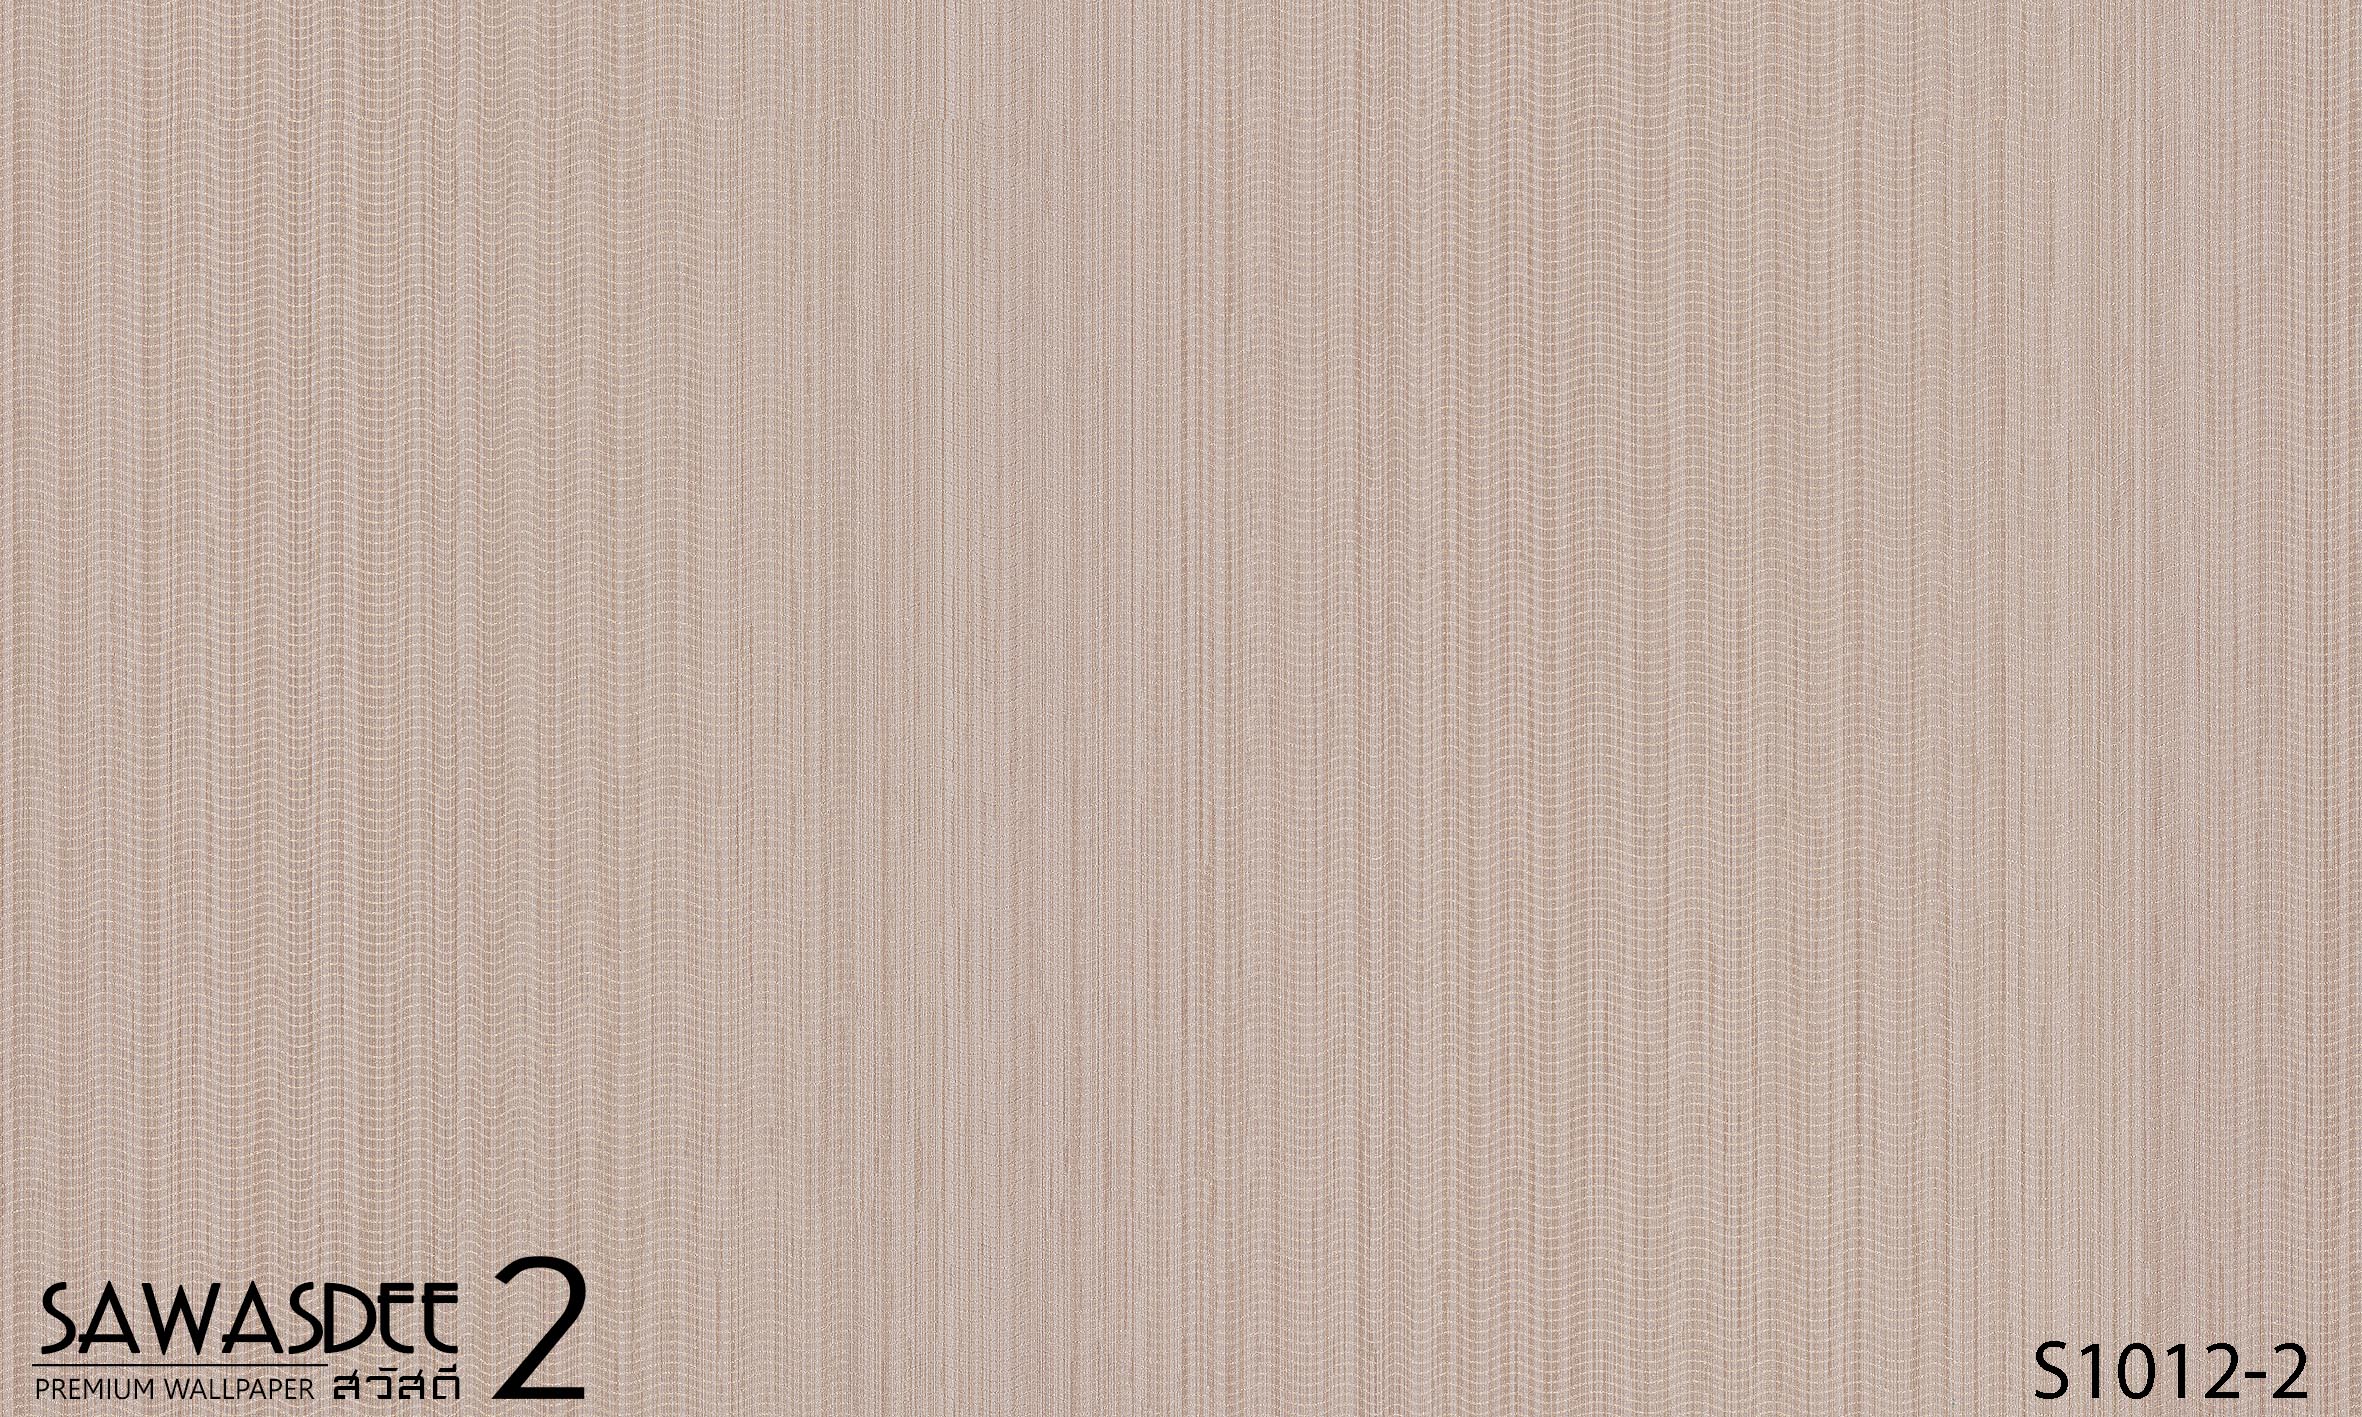 Wallpaper (SAWASDEE 2) S1012-2